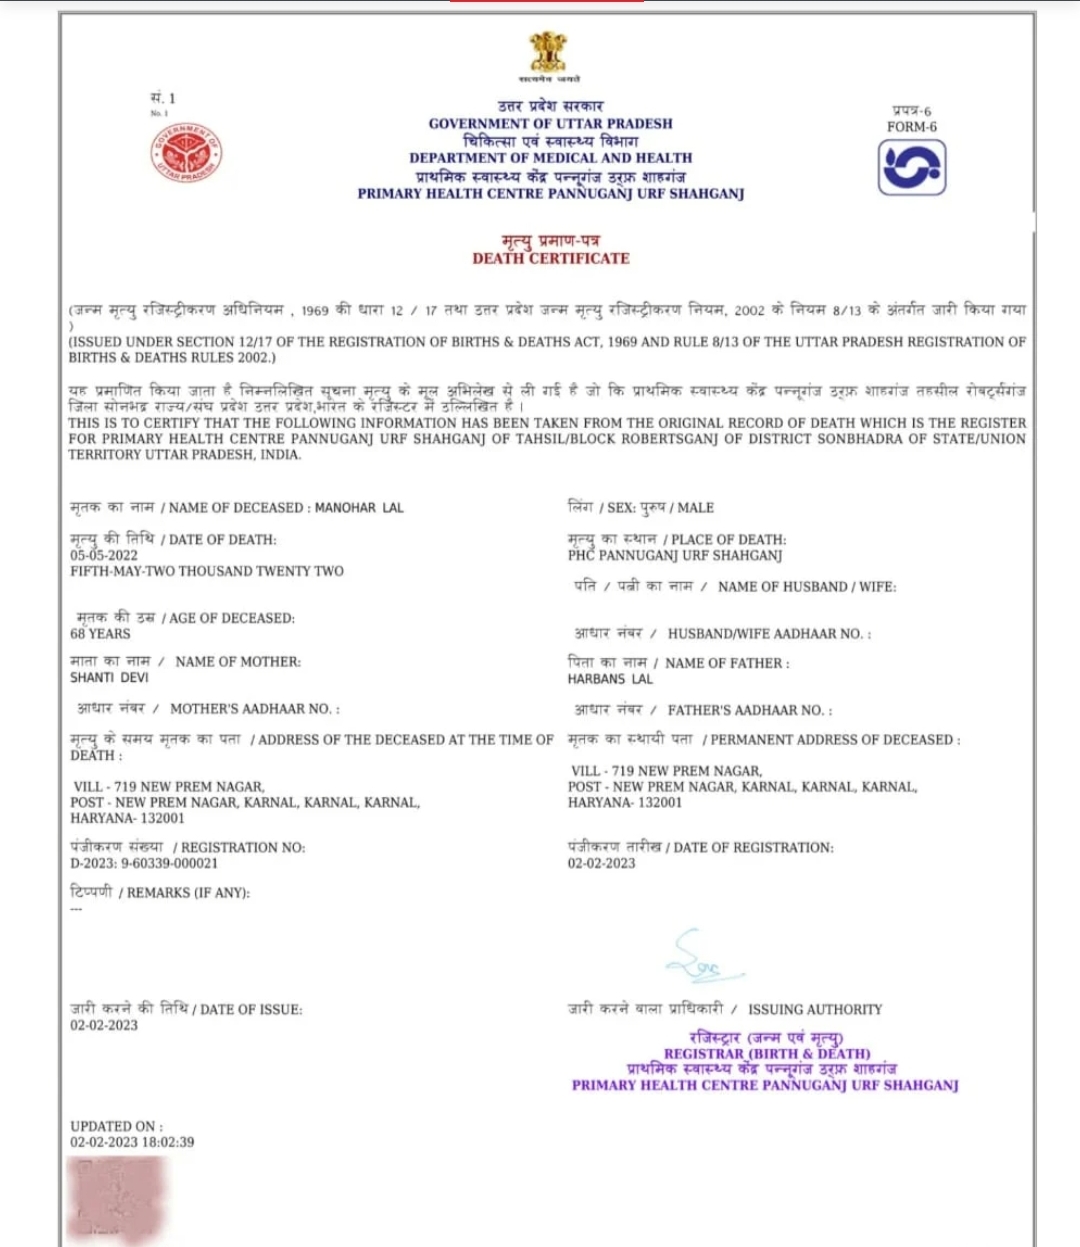 Fake death certificate of Manohar Lal Khattar